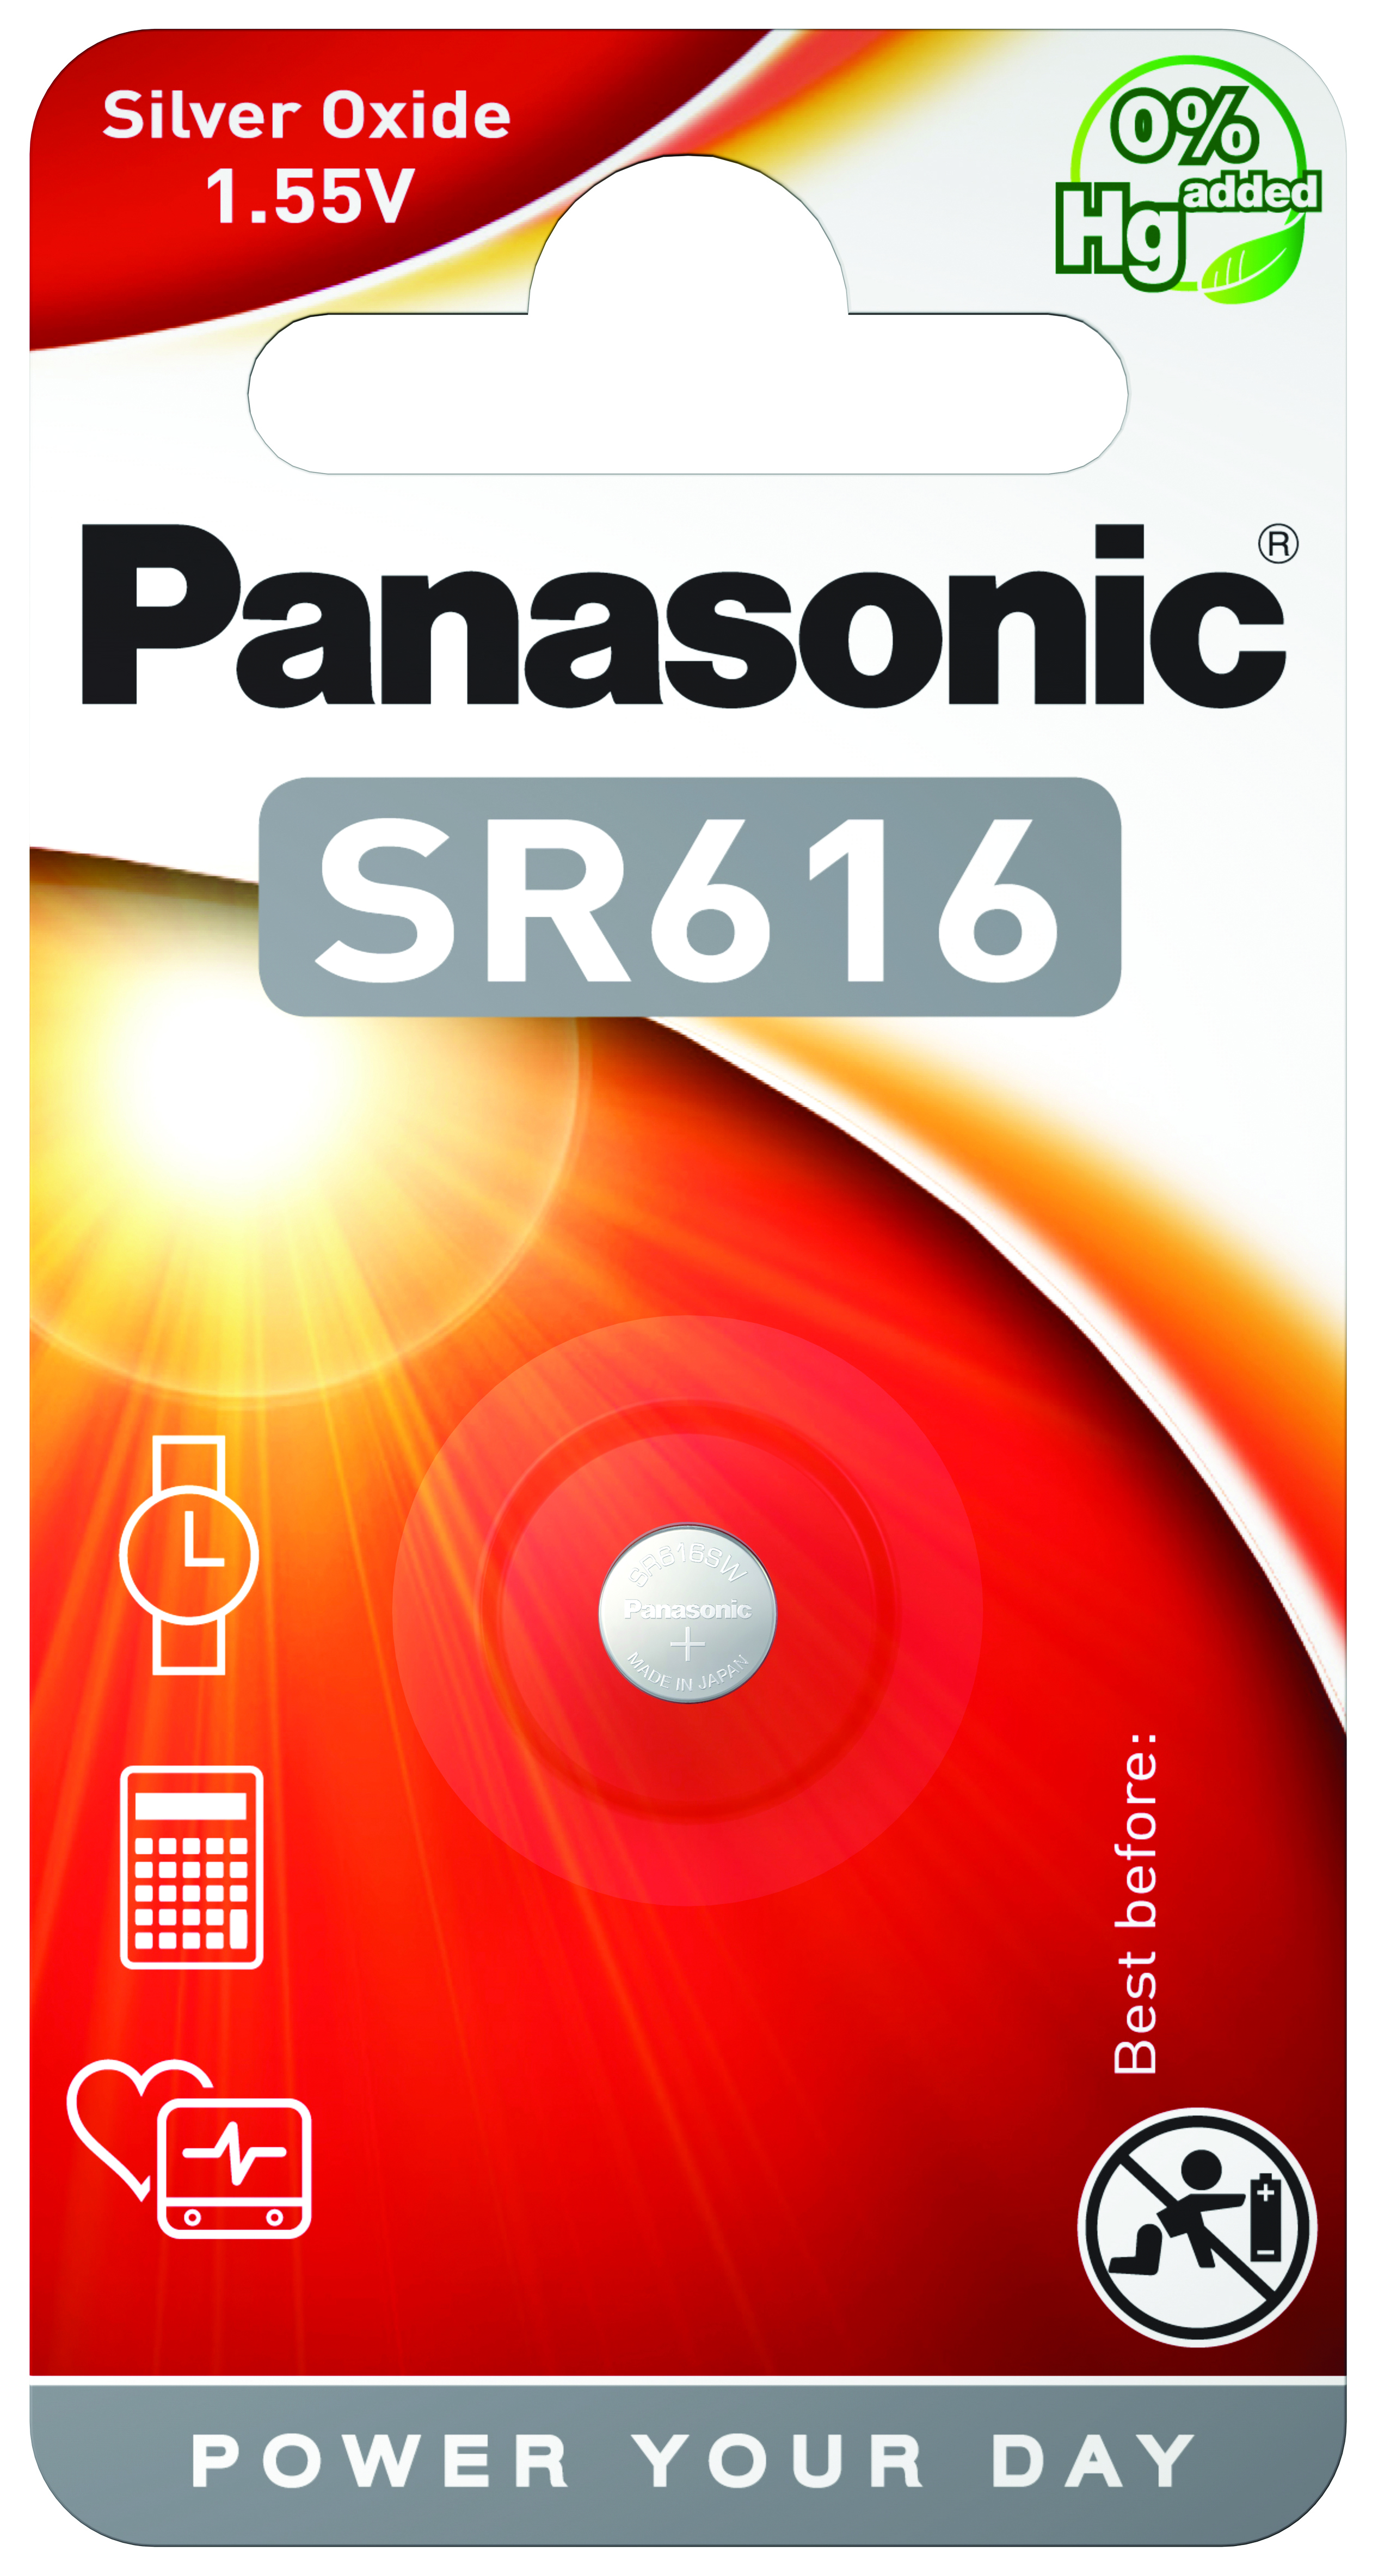 Panasonic SR616 (Silberoxid/Uhrenbatterien)